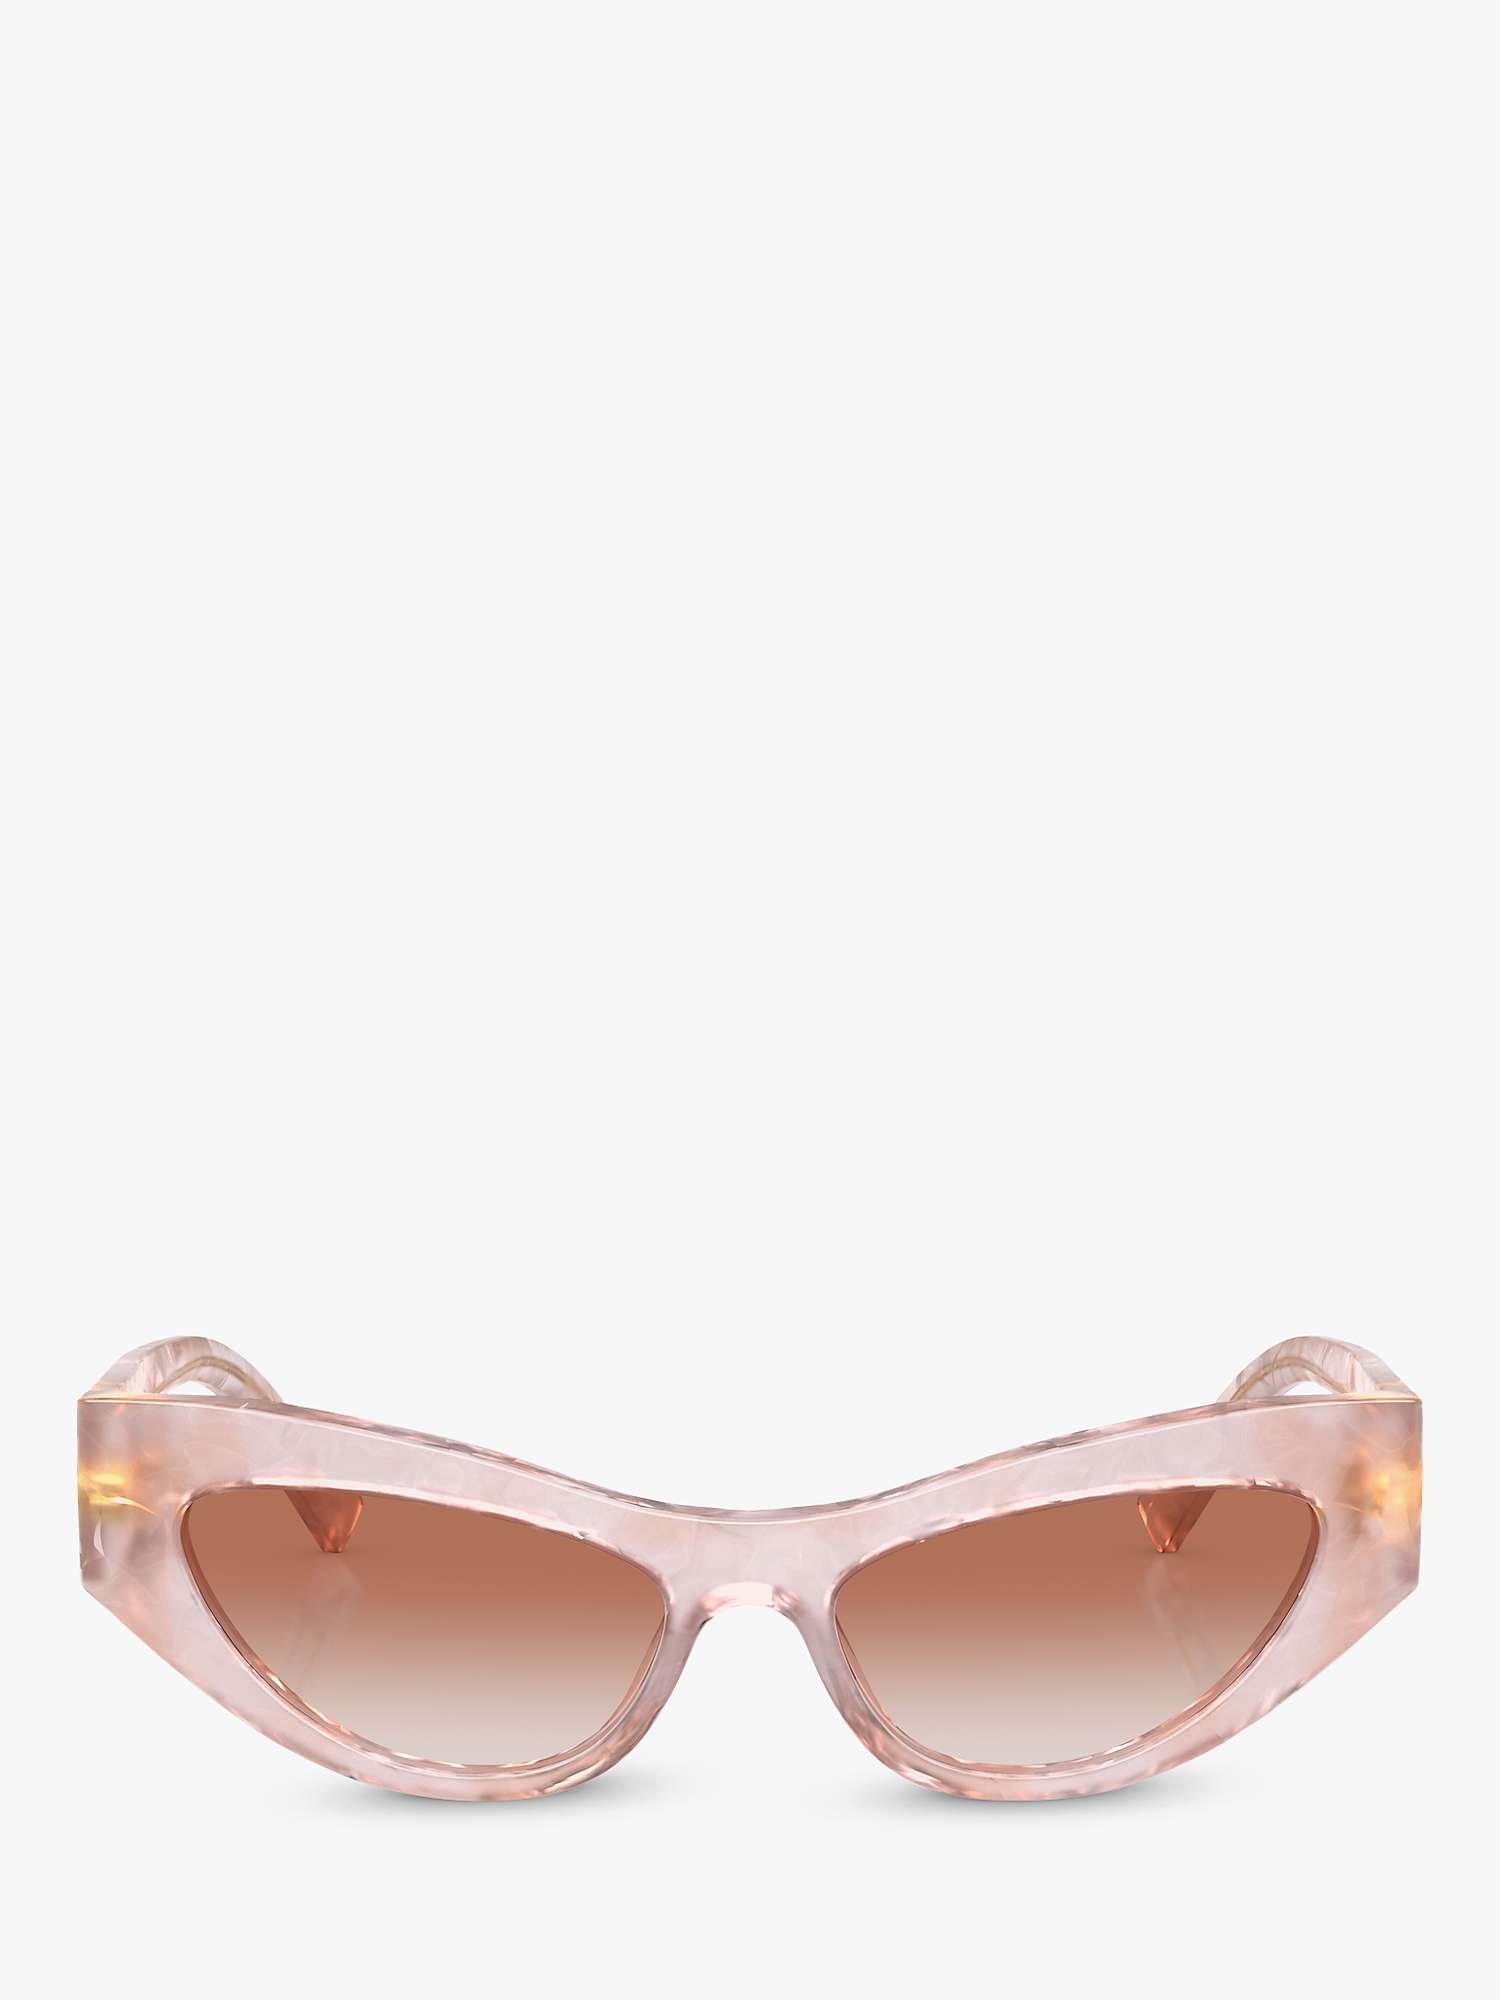 Buy Dolce & Gabbana DG4450 Women's Cat's Eye Sunglasses, Madre Perla Pink/Brown Gradient Online at johnlewis.com